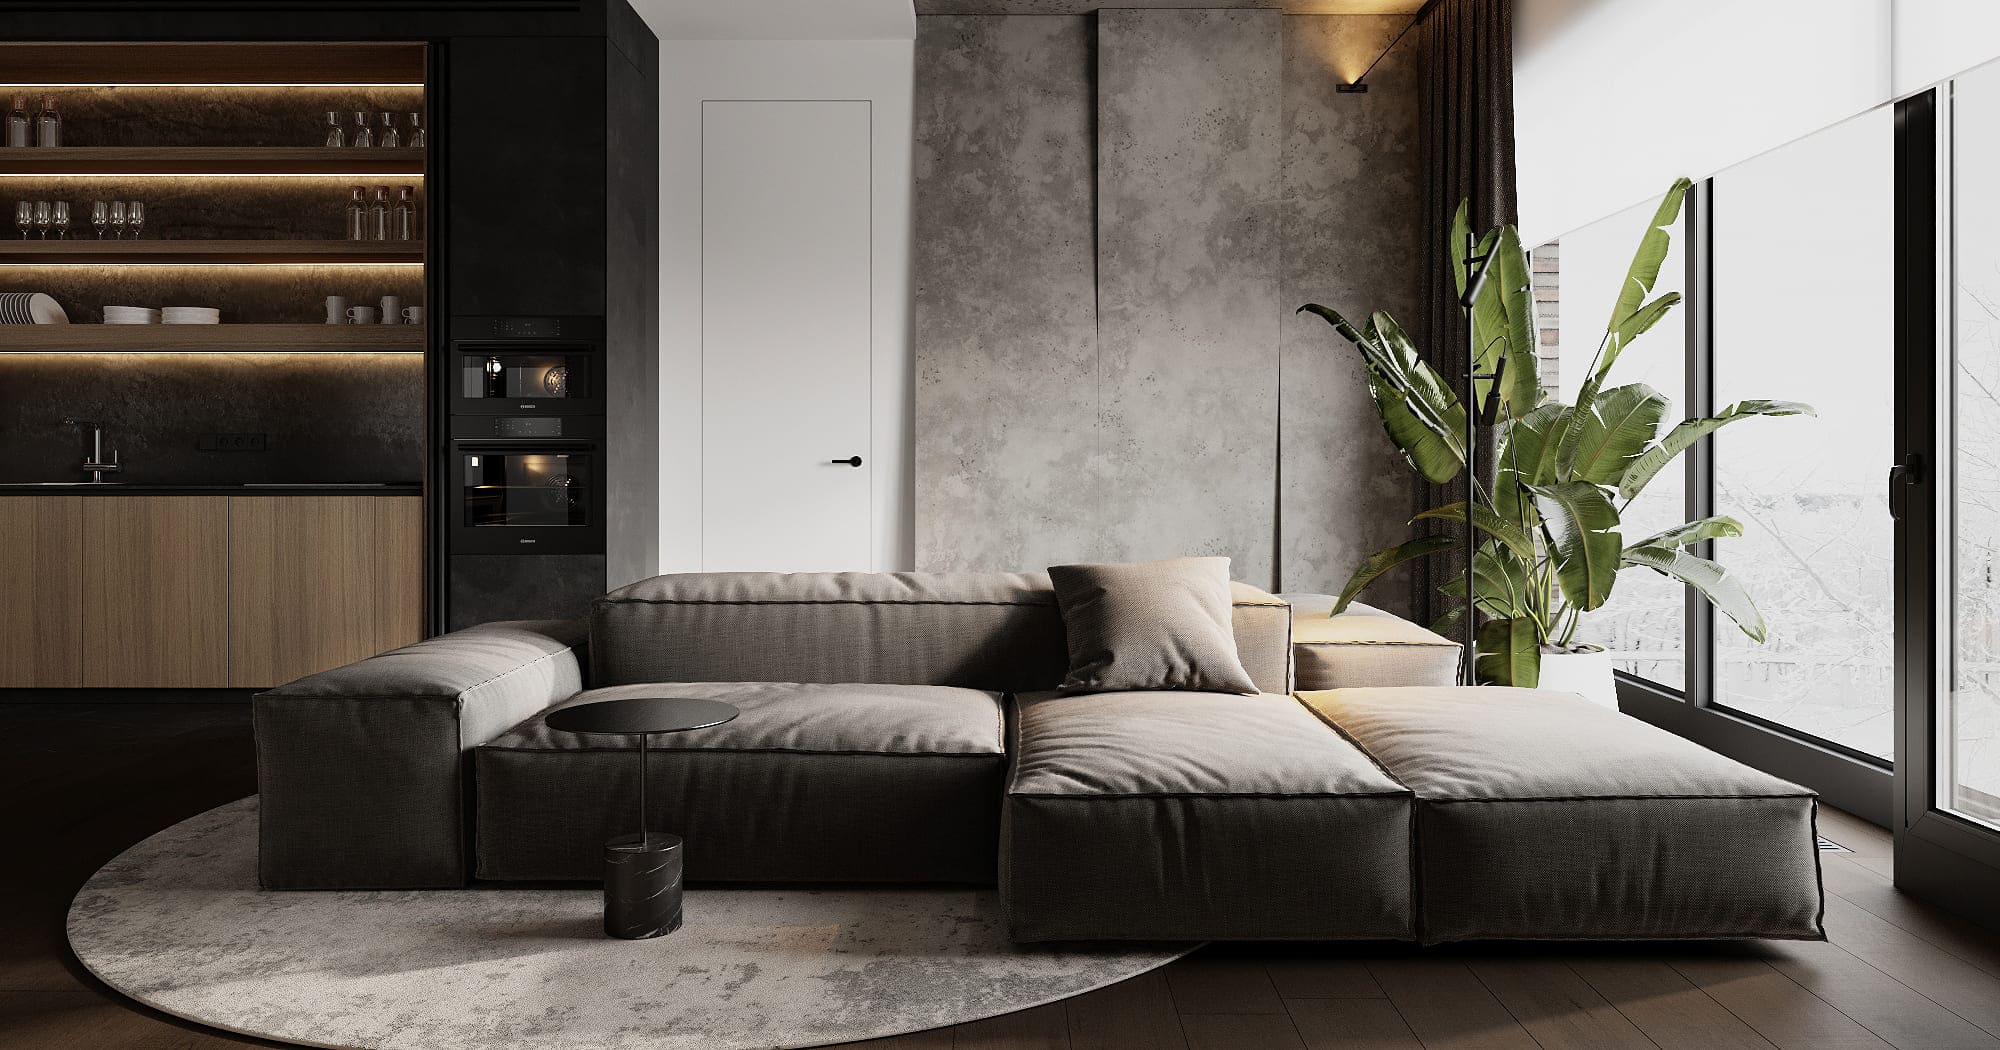 Stylish minimalist apartment